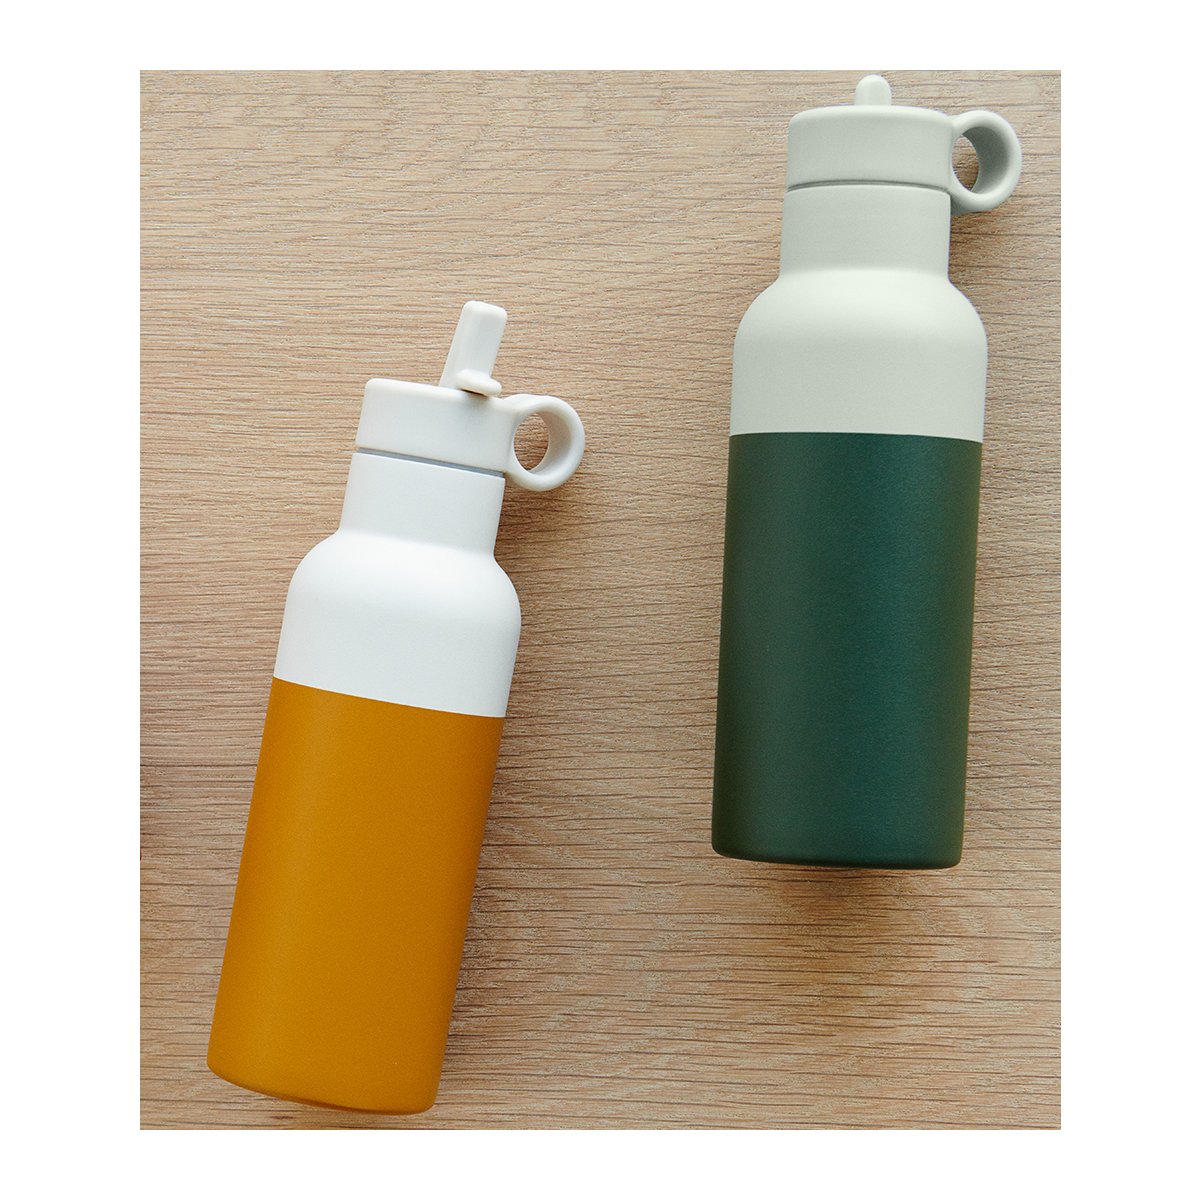 Neo water bottle Mustard/sandy mix